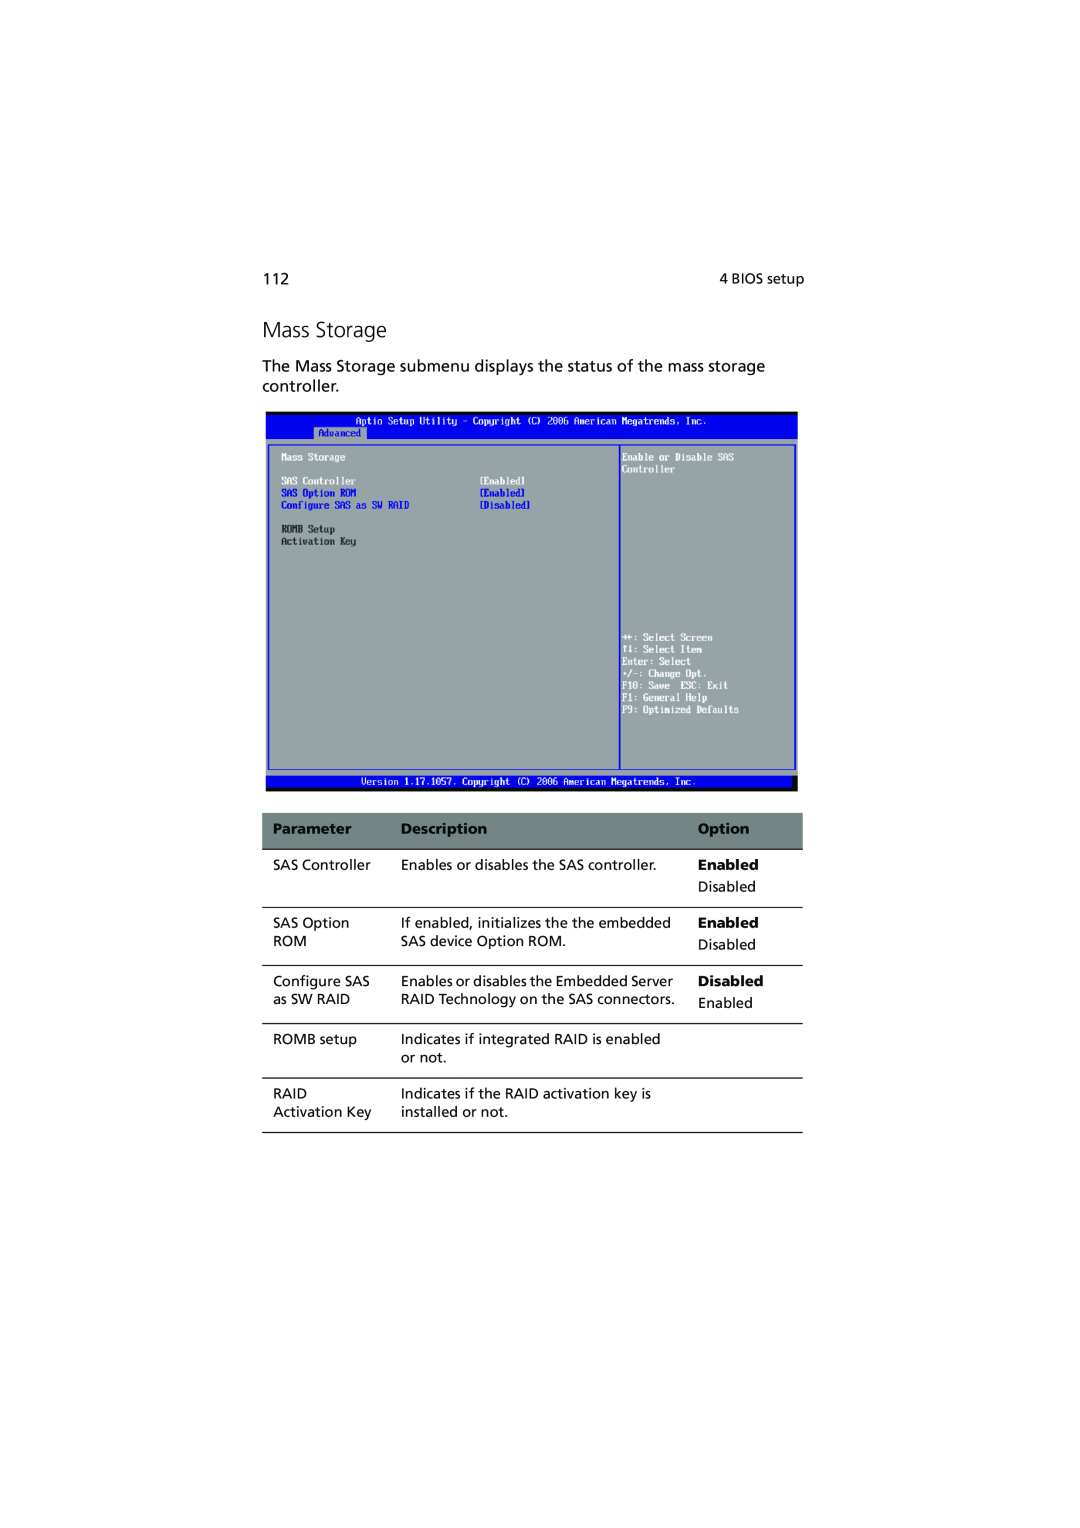 Acer R720 Series manual Mass Storage, Parameter, Description, Option, Enabled, Disabled 